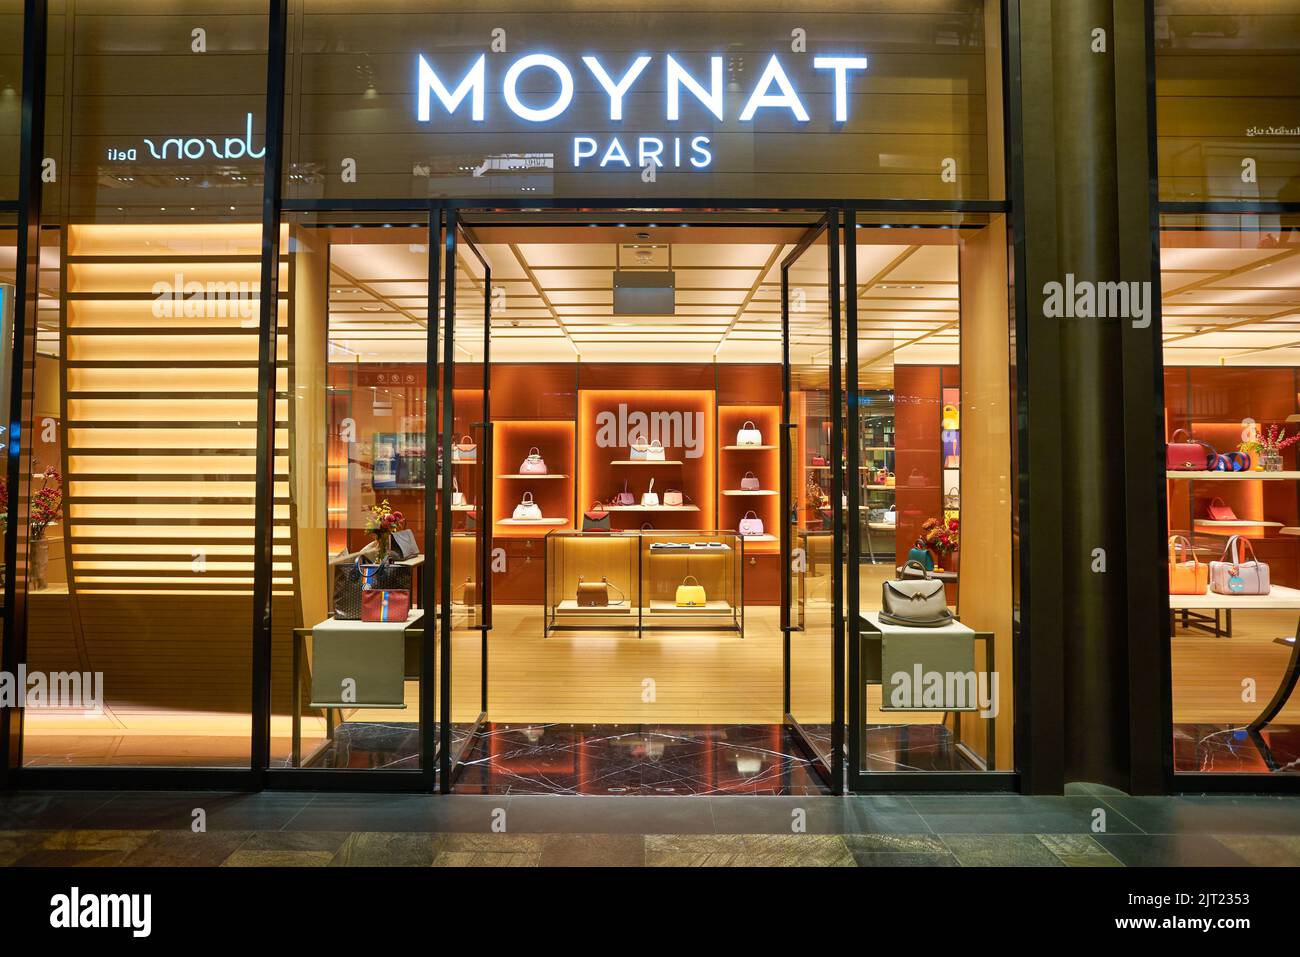 Moynat paris hi-res stock photography and images - Alamy